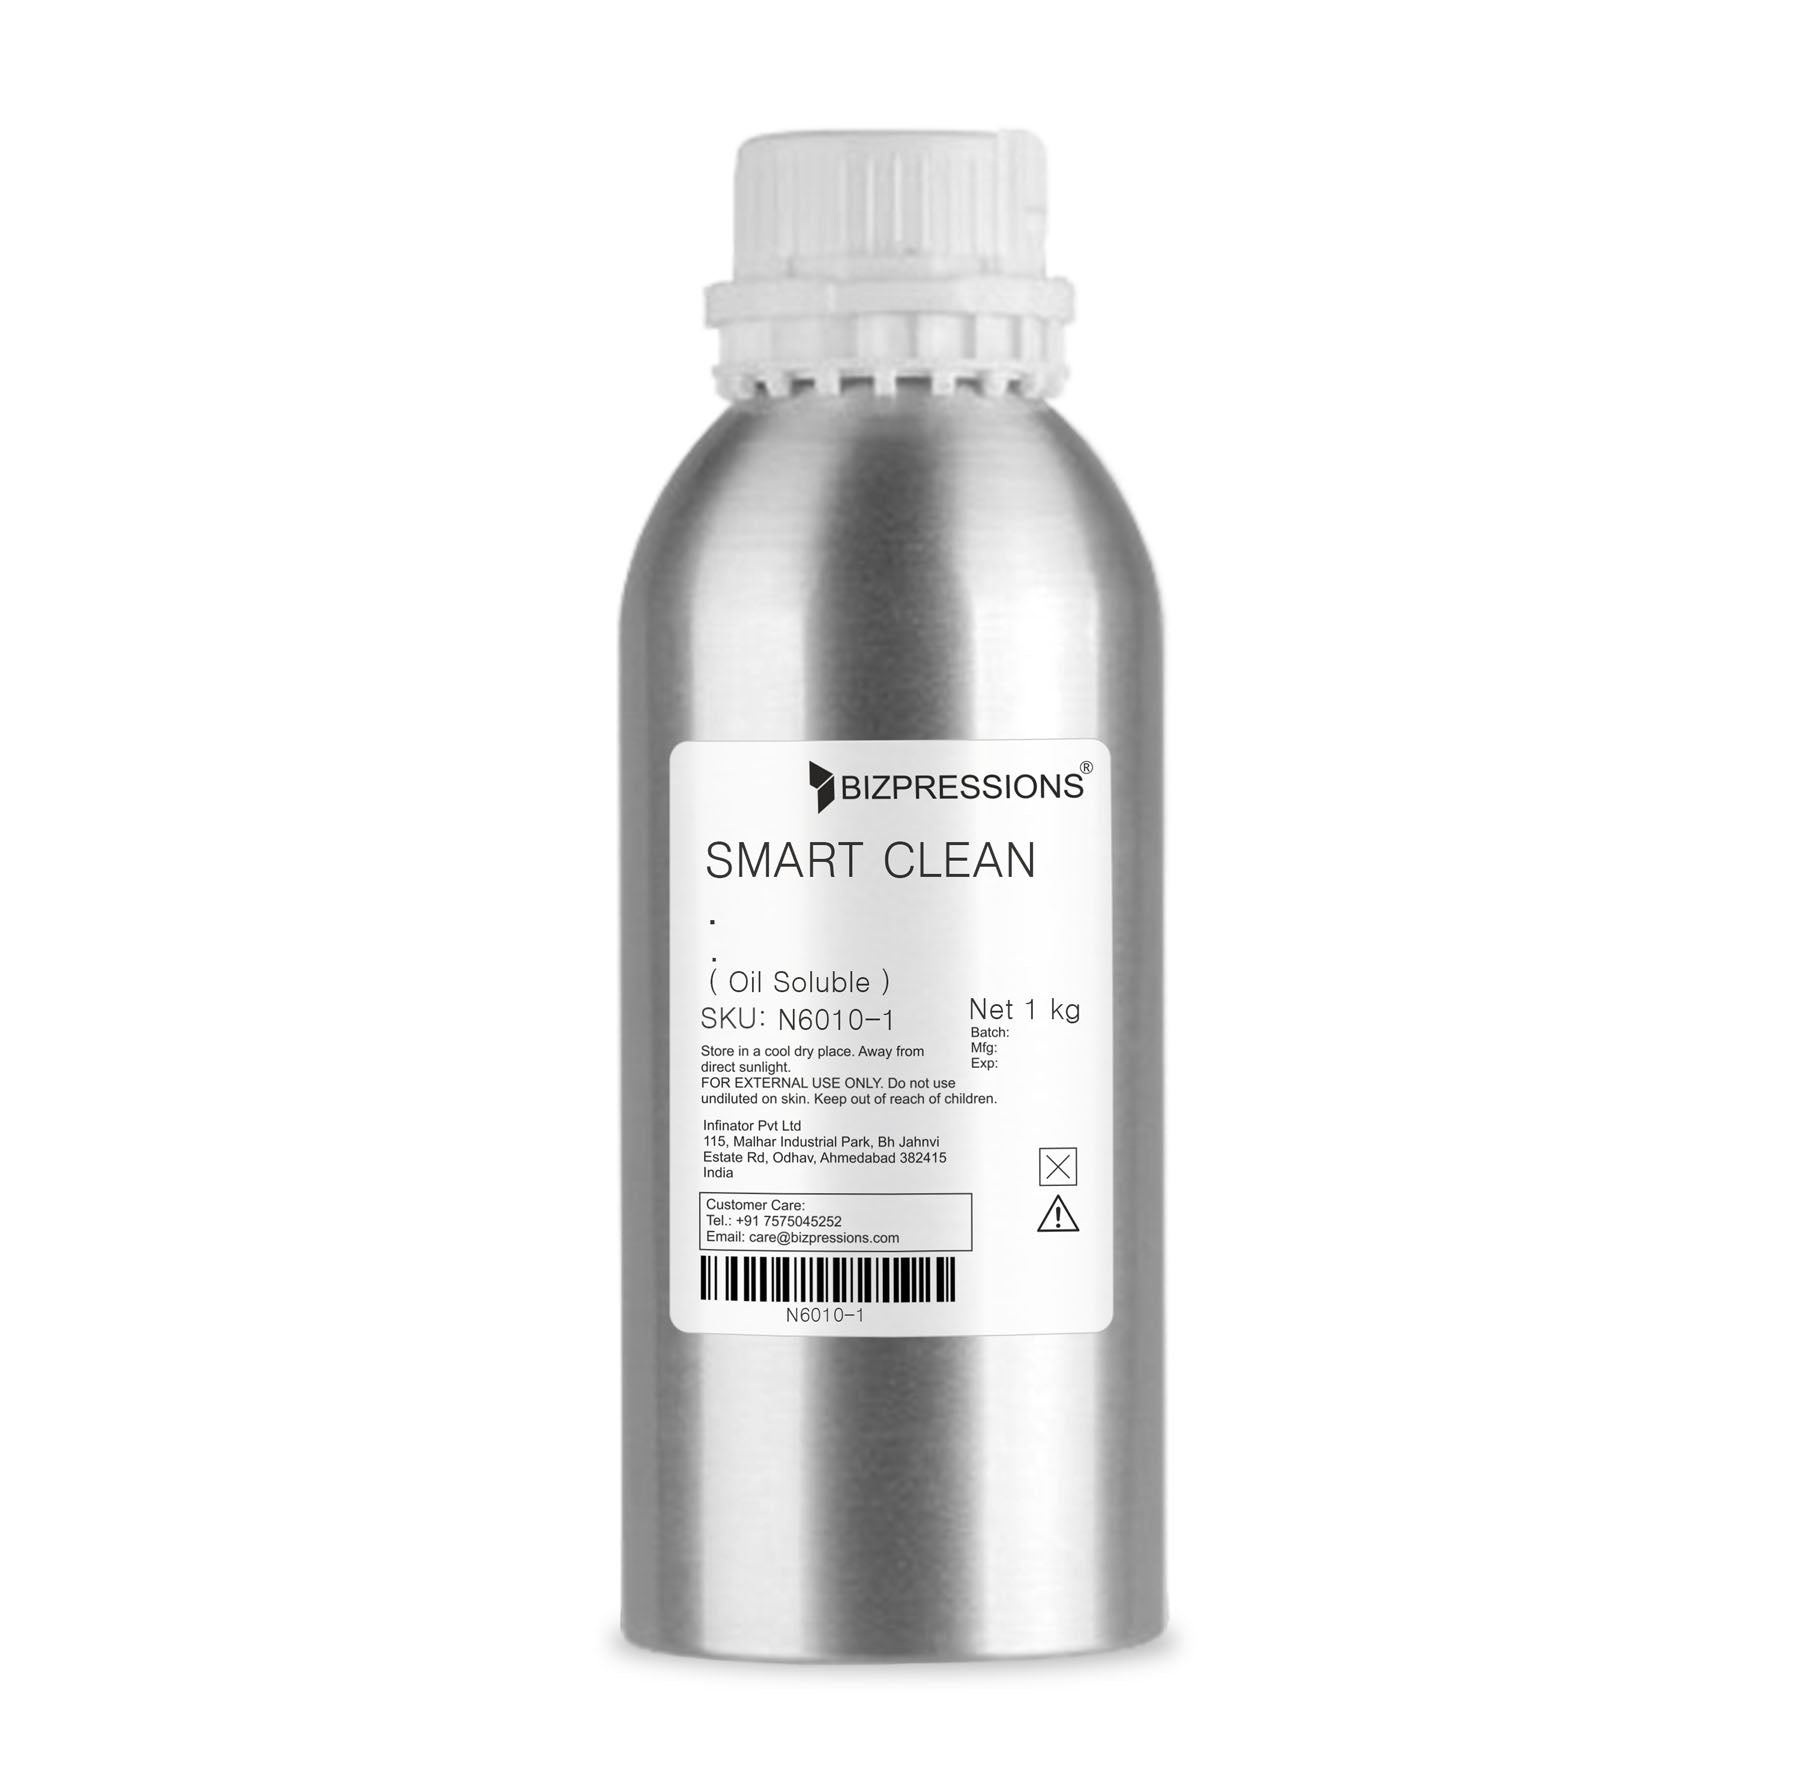 SMART CLEAN - Fragrance ( Oil Soluble ) - 1 kg